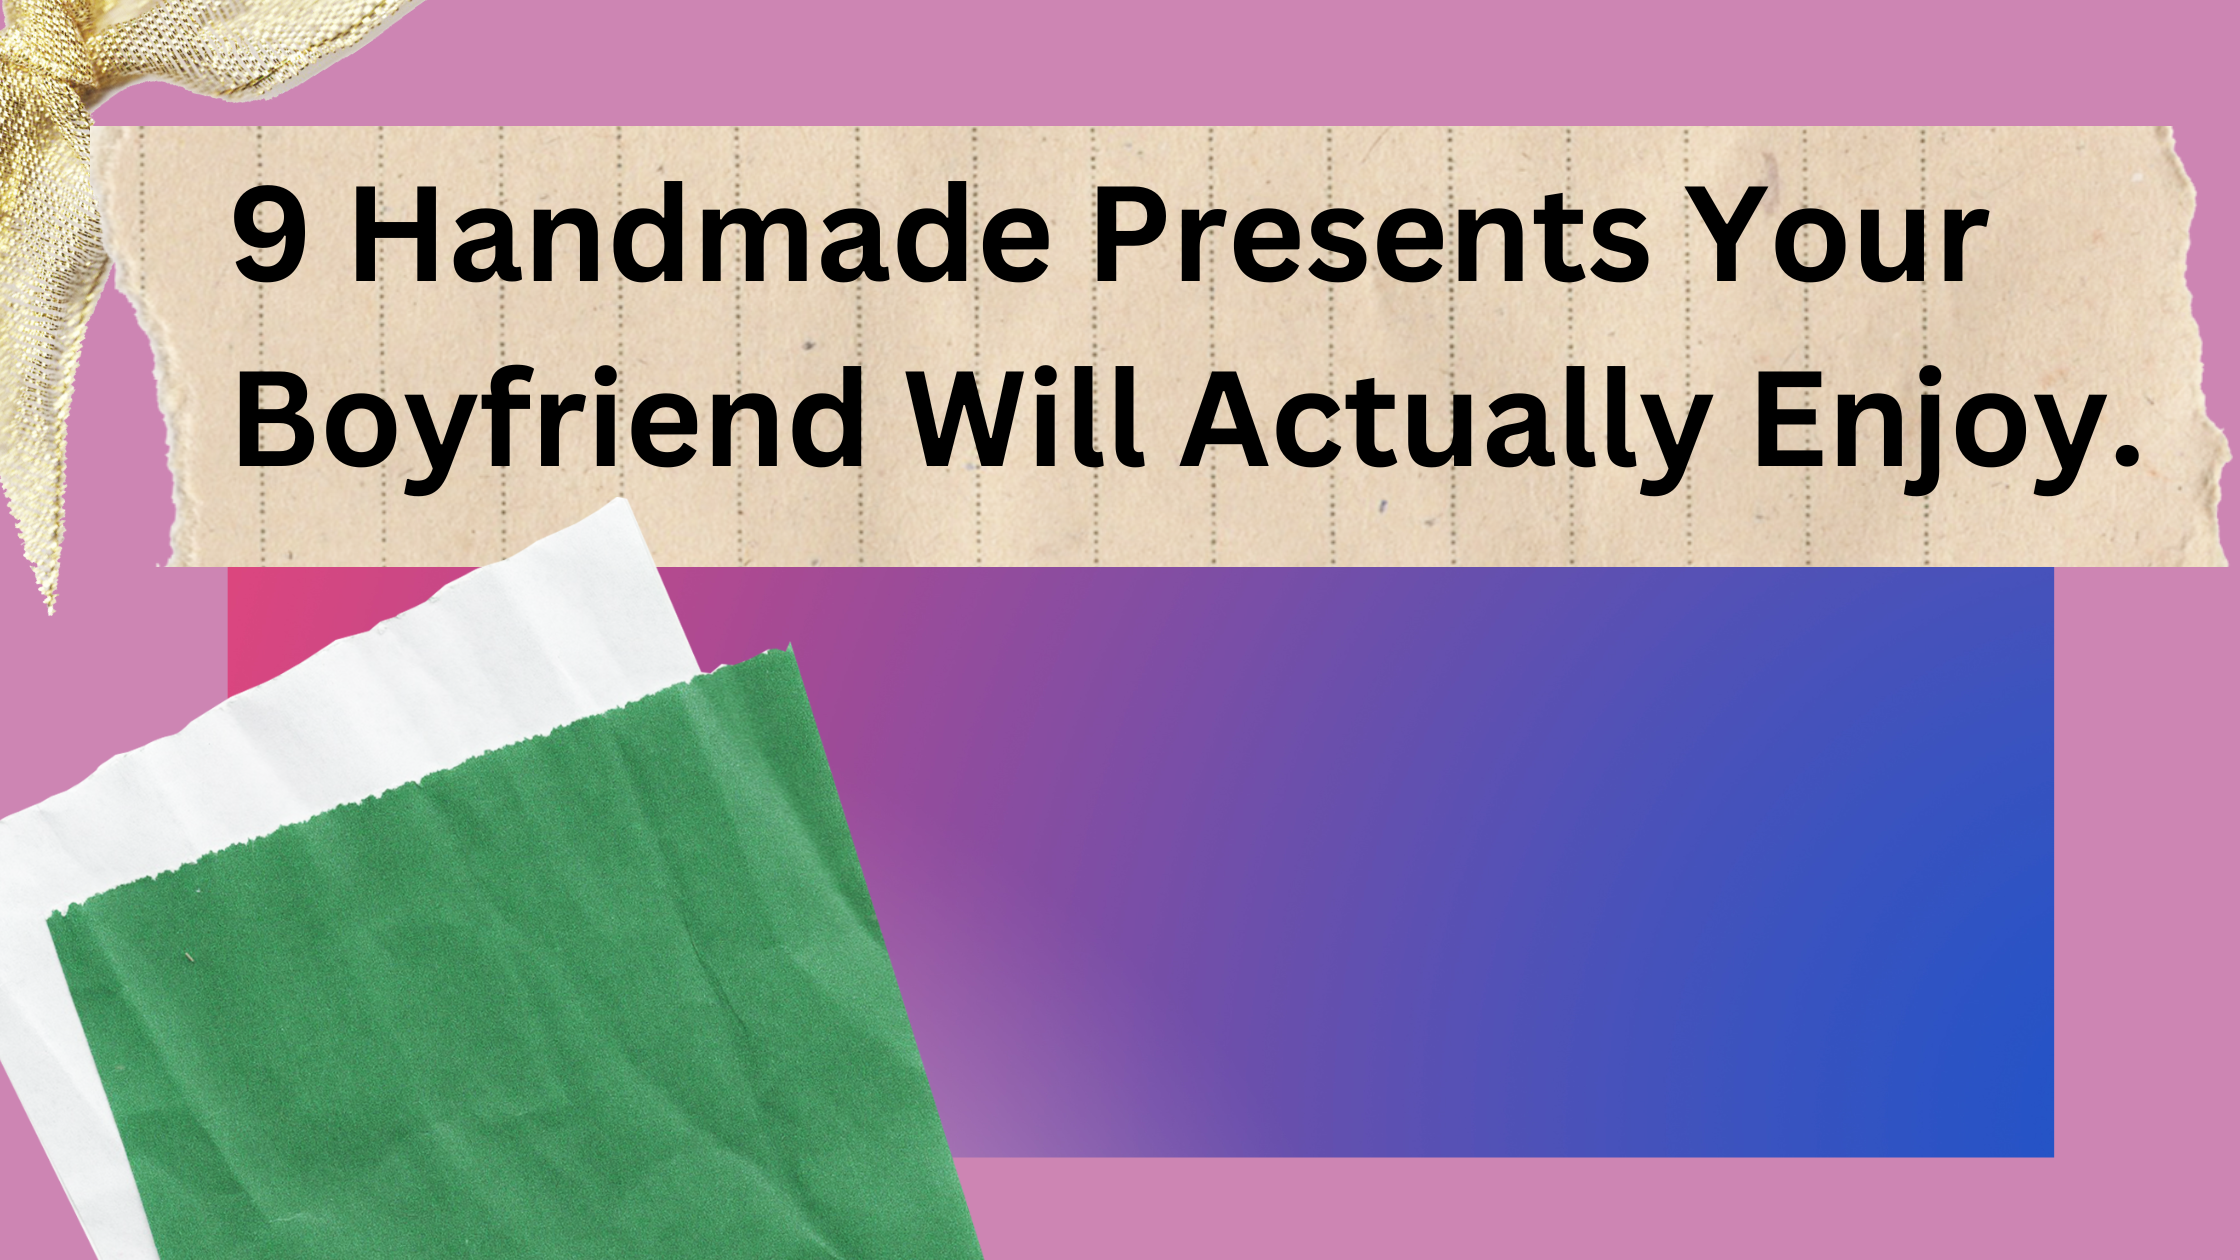 9 Handmade Presents Your Boyfriend Will Actually Enjoy.